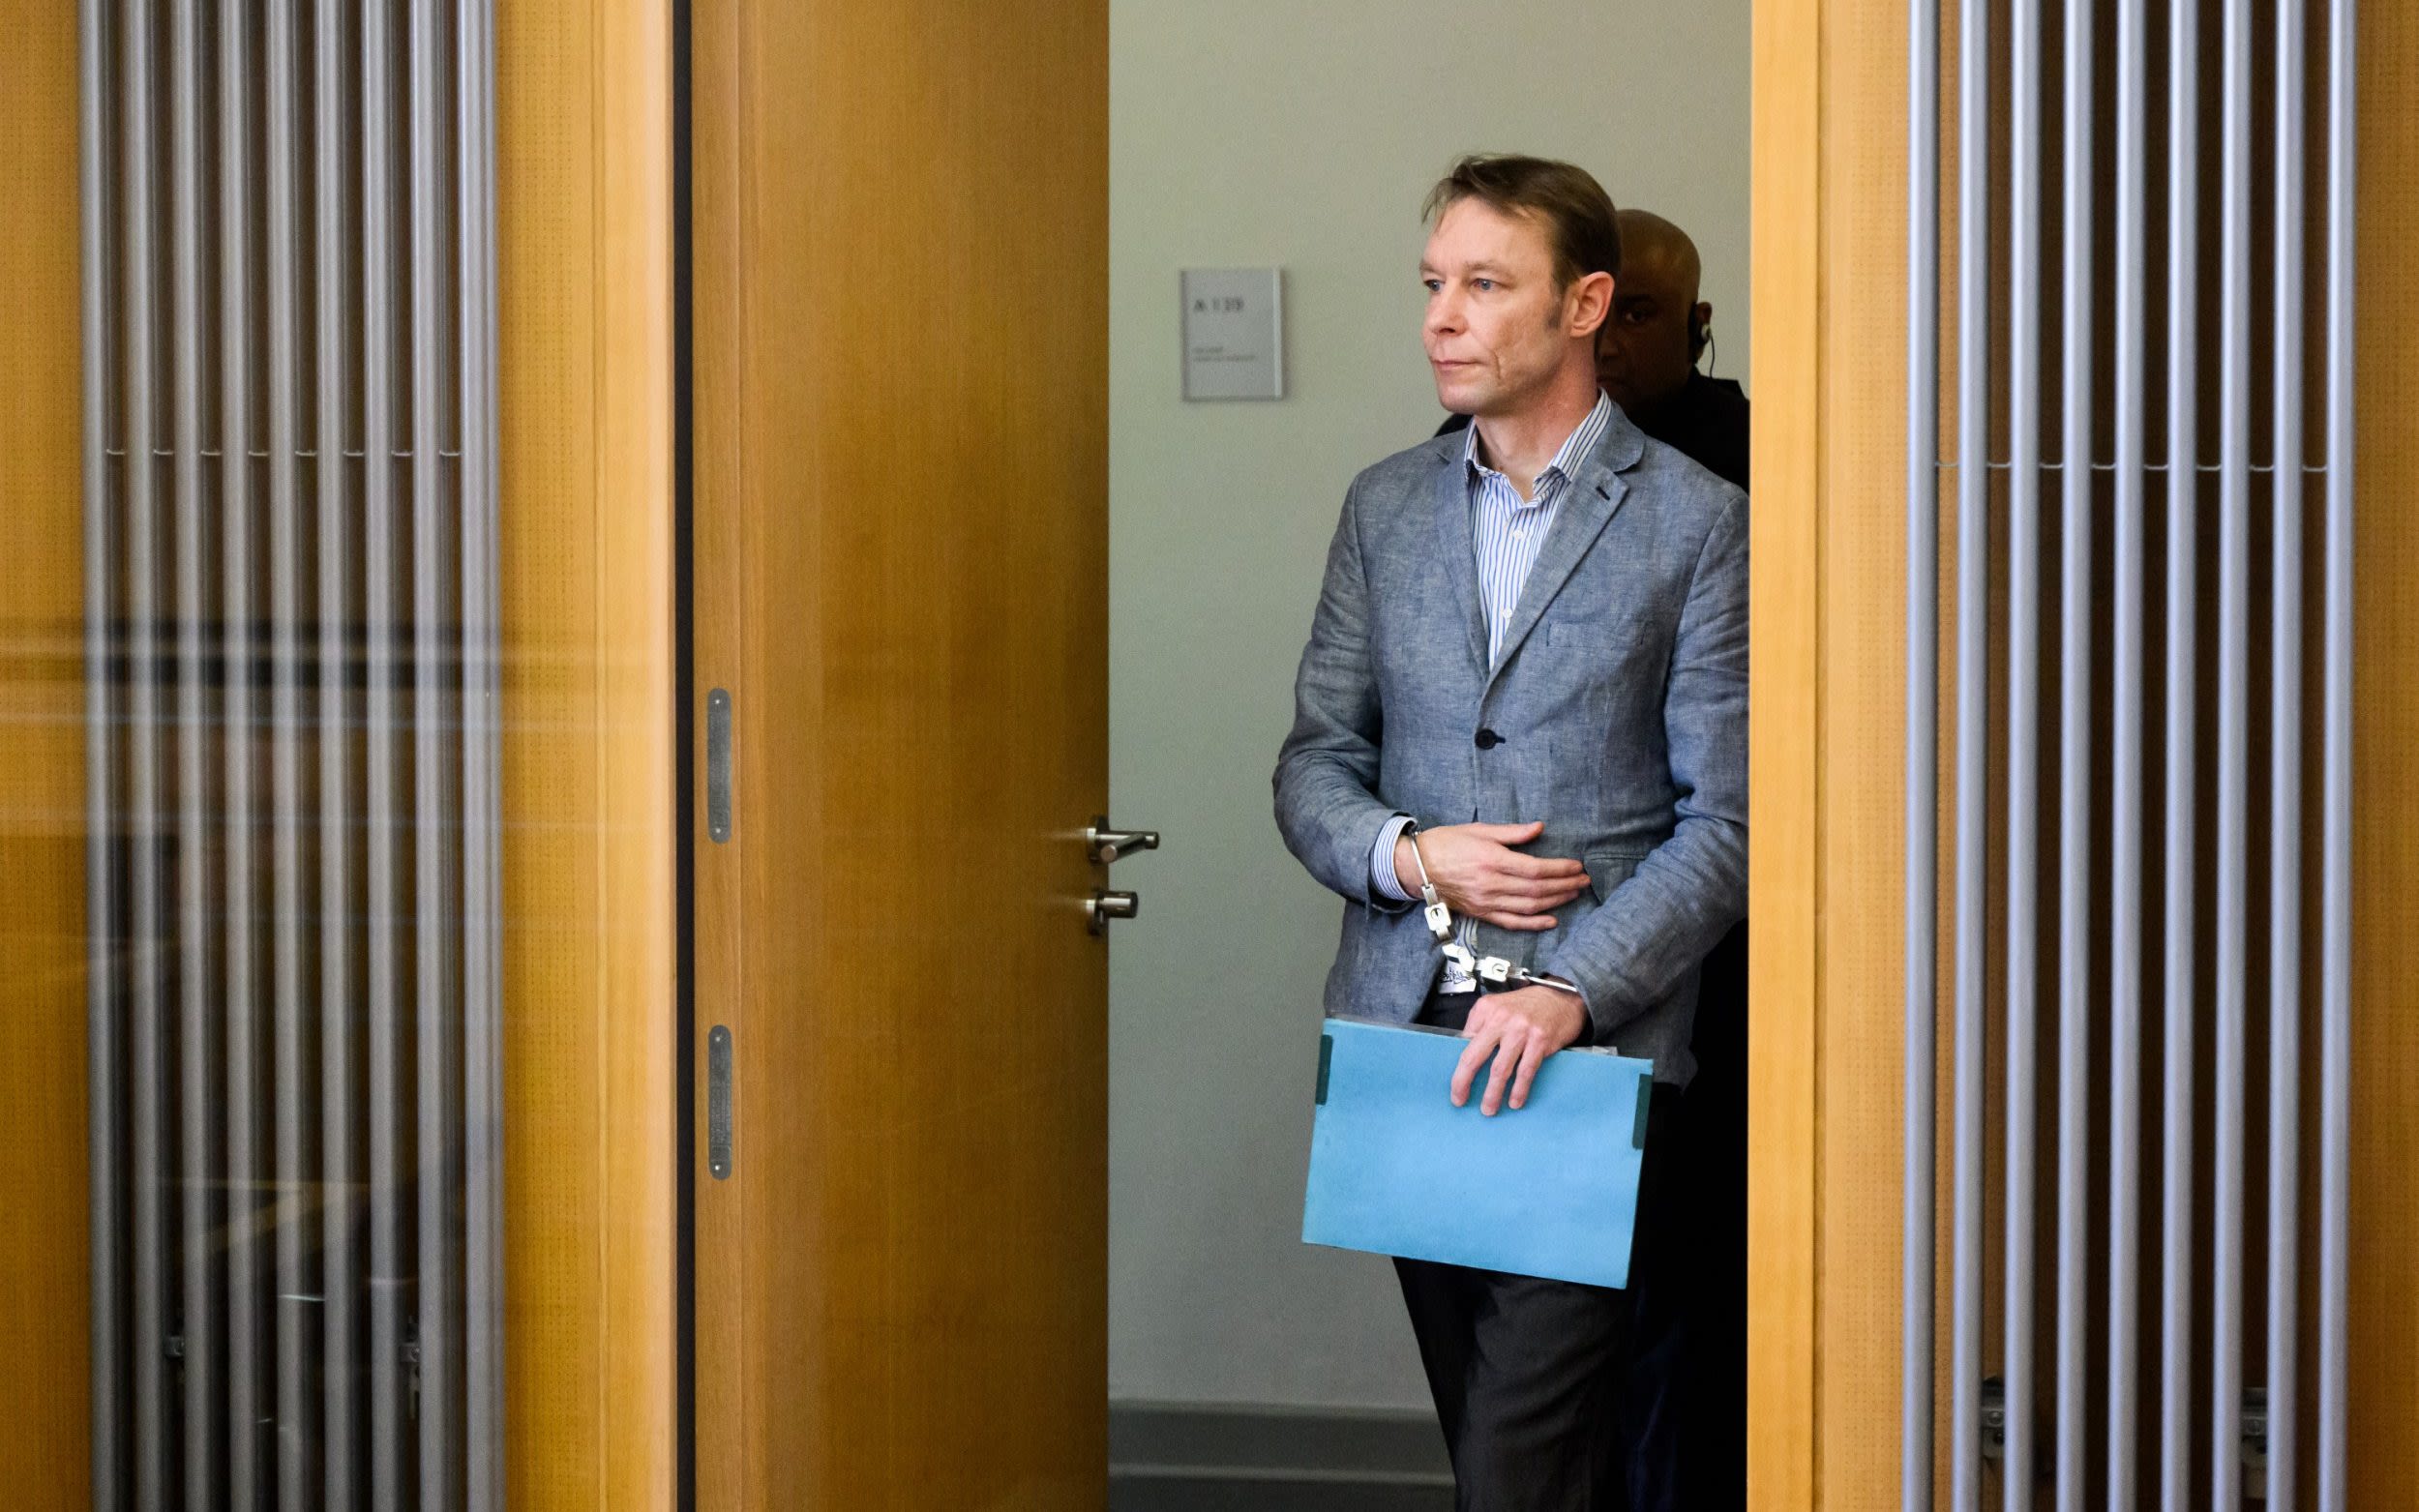 Christian Brückner linked to Madeleine McCann via email account, court hears